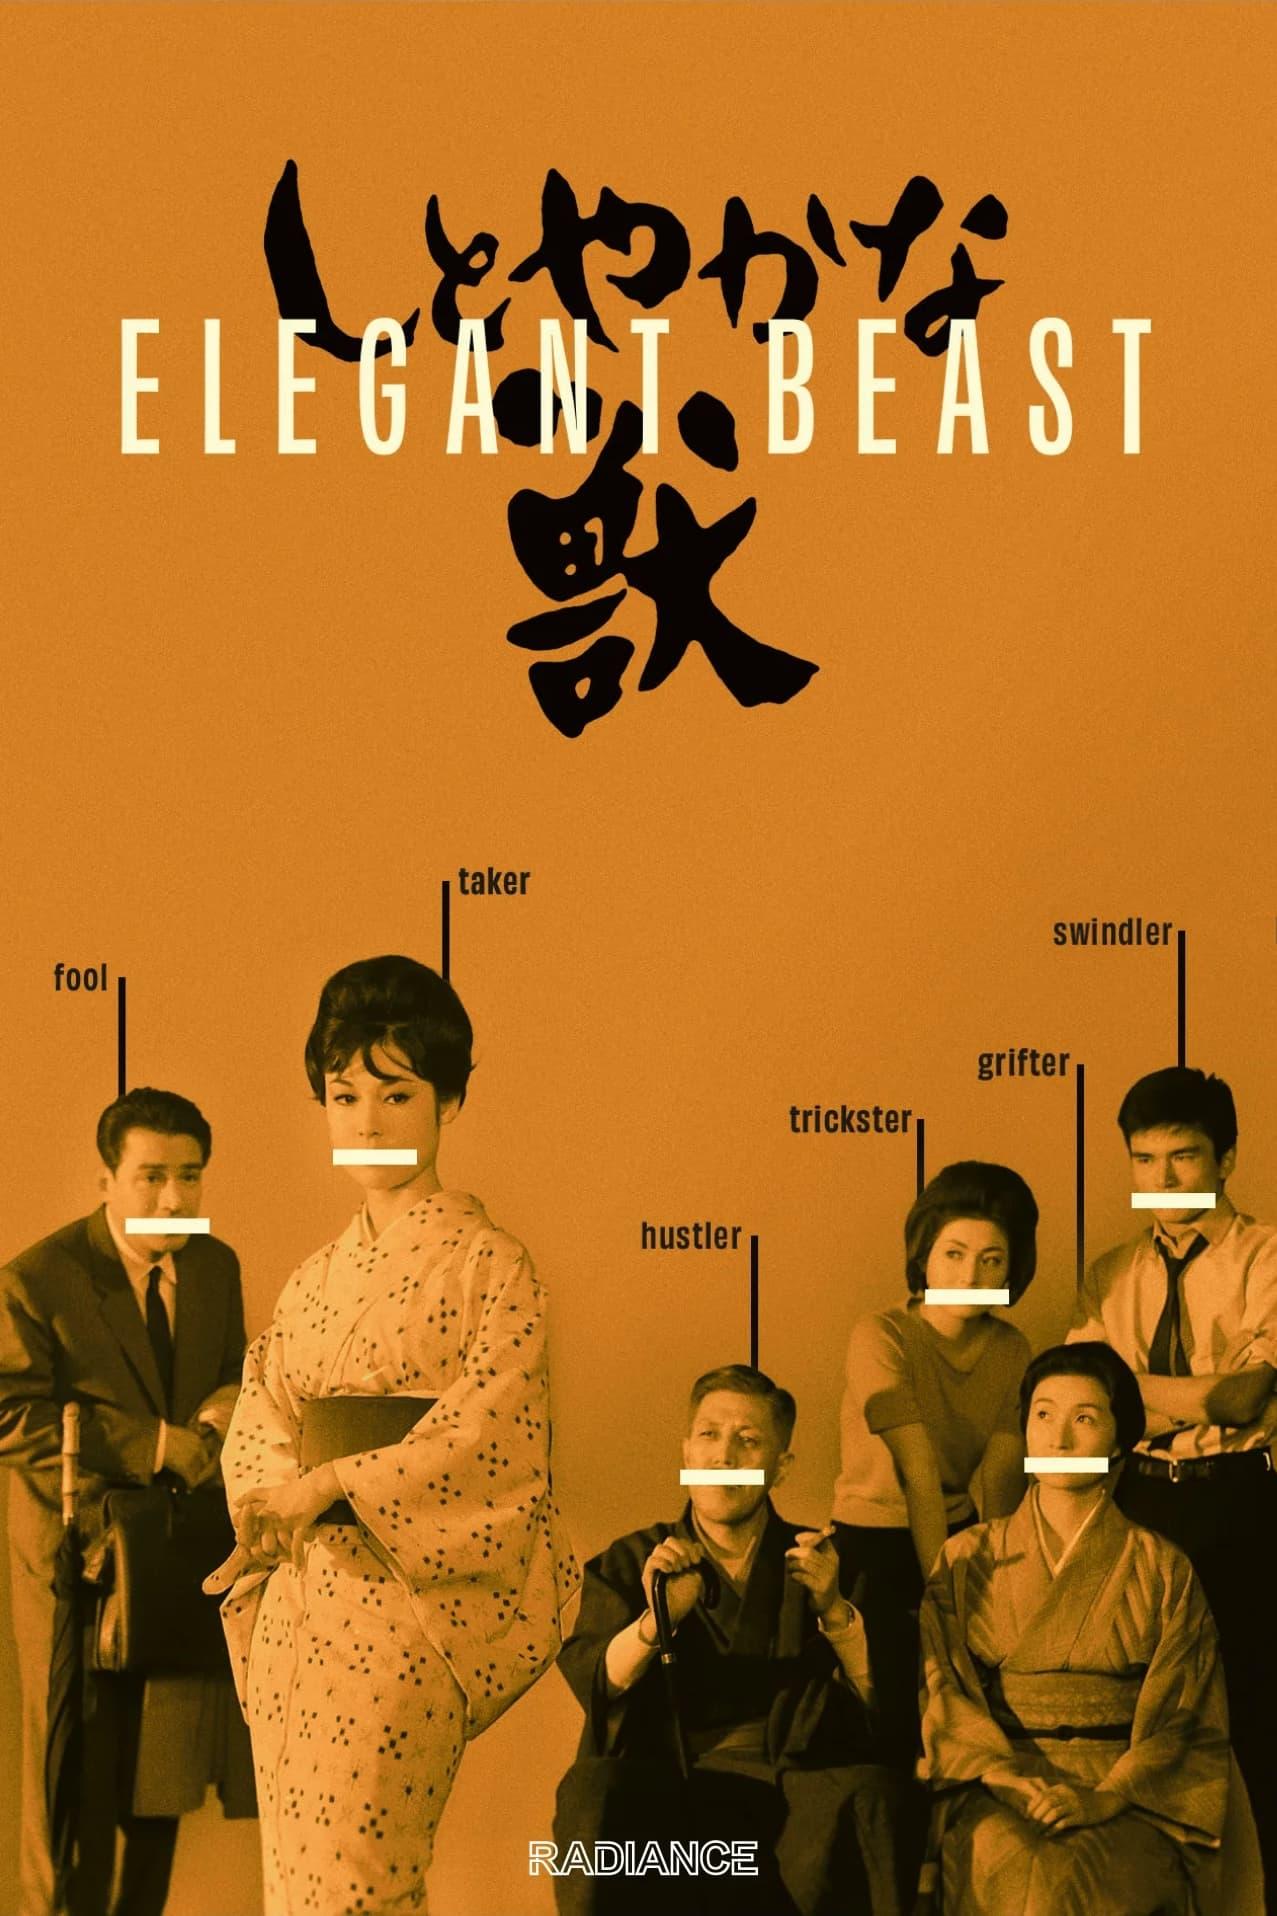 Elegant Beast poster